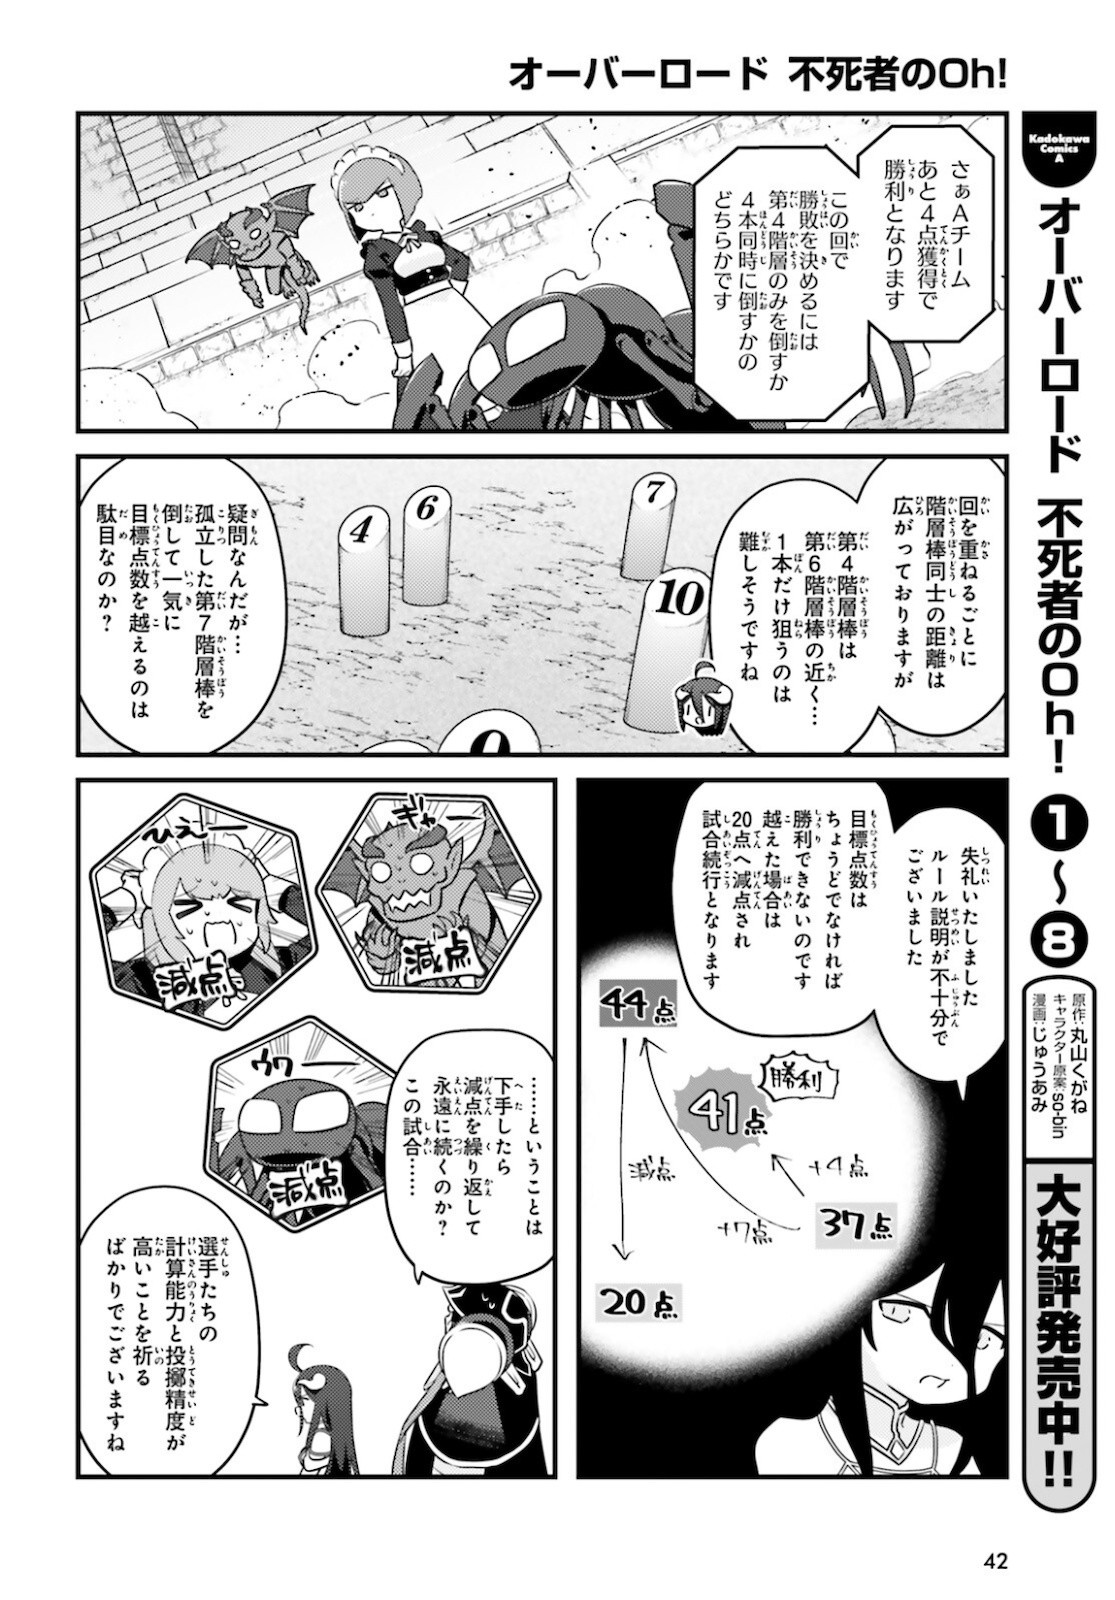 Overlord-Fushisha-no-Oh - Chapter 50 - Page 18